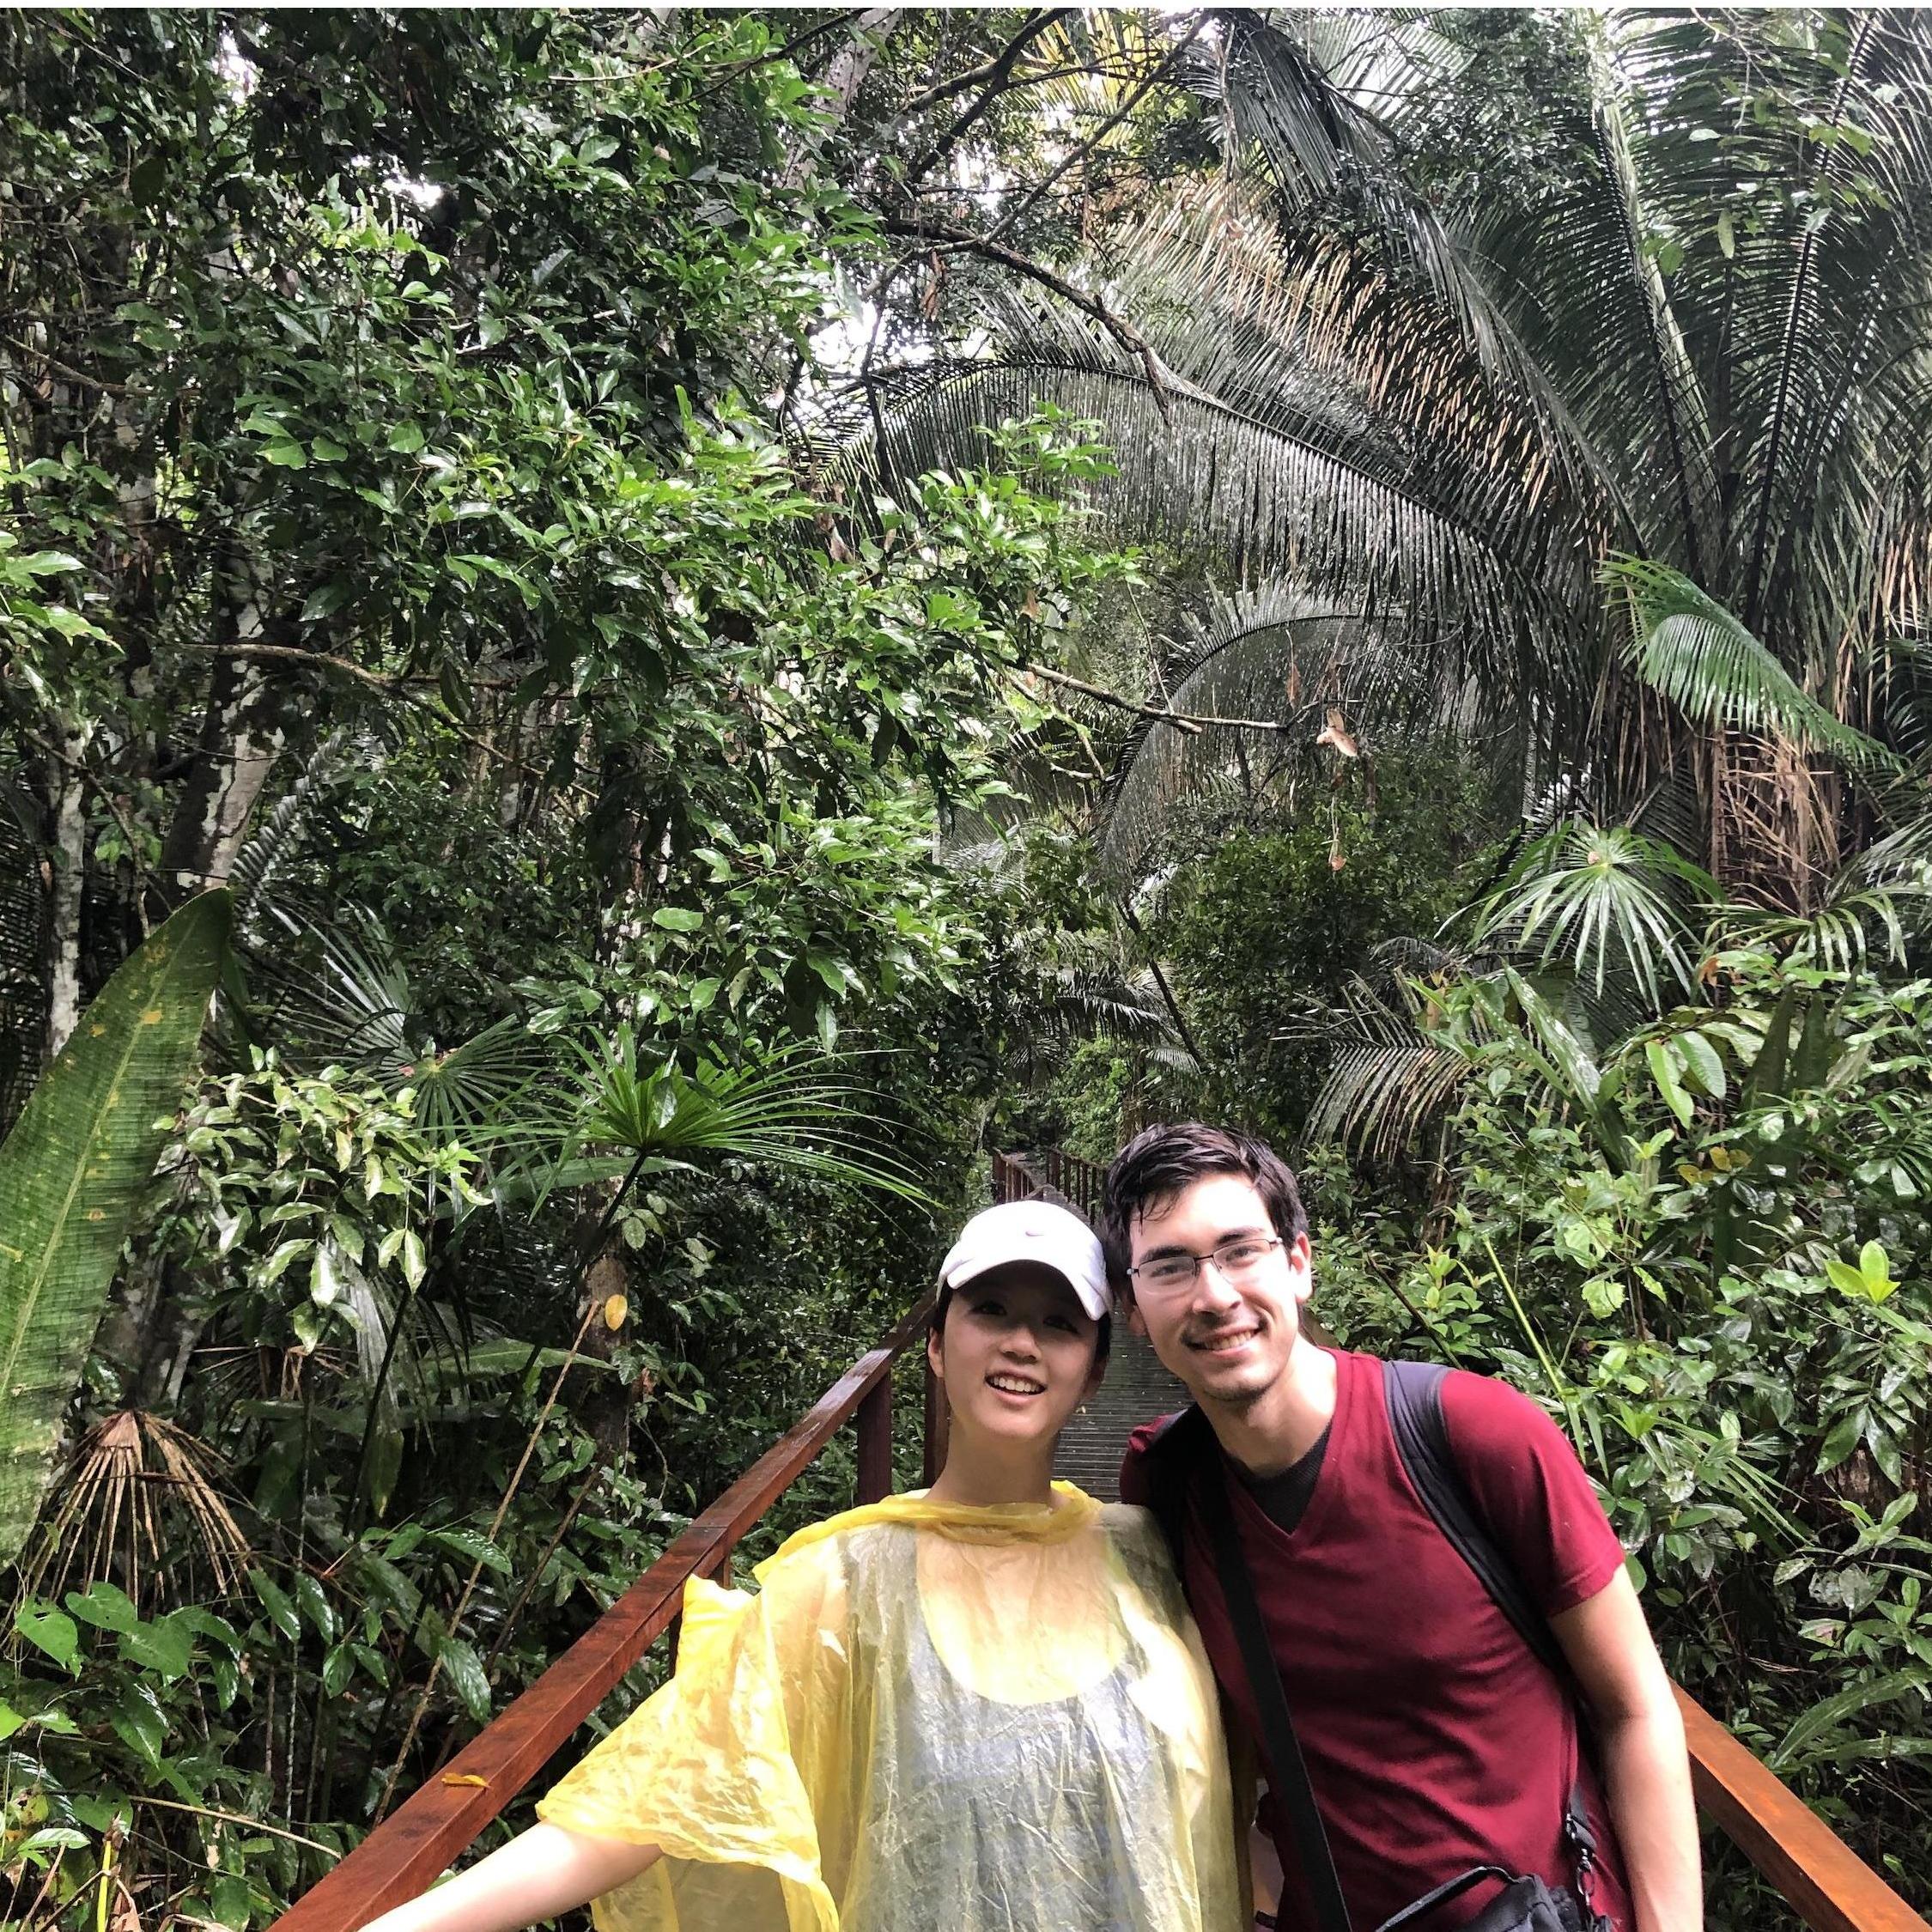 Hiking through the lush jungle (Peru, December 2019)